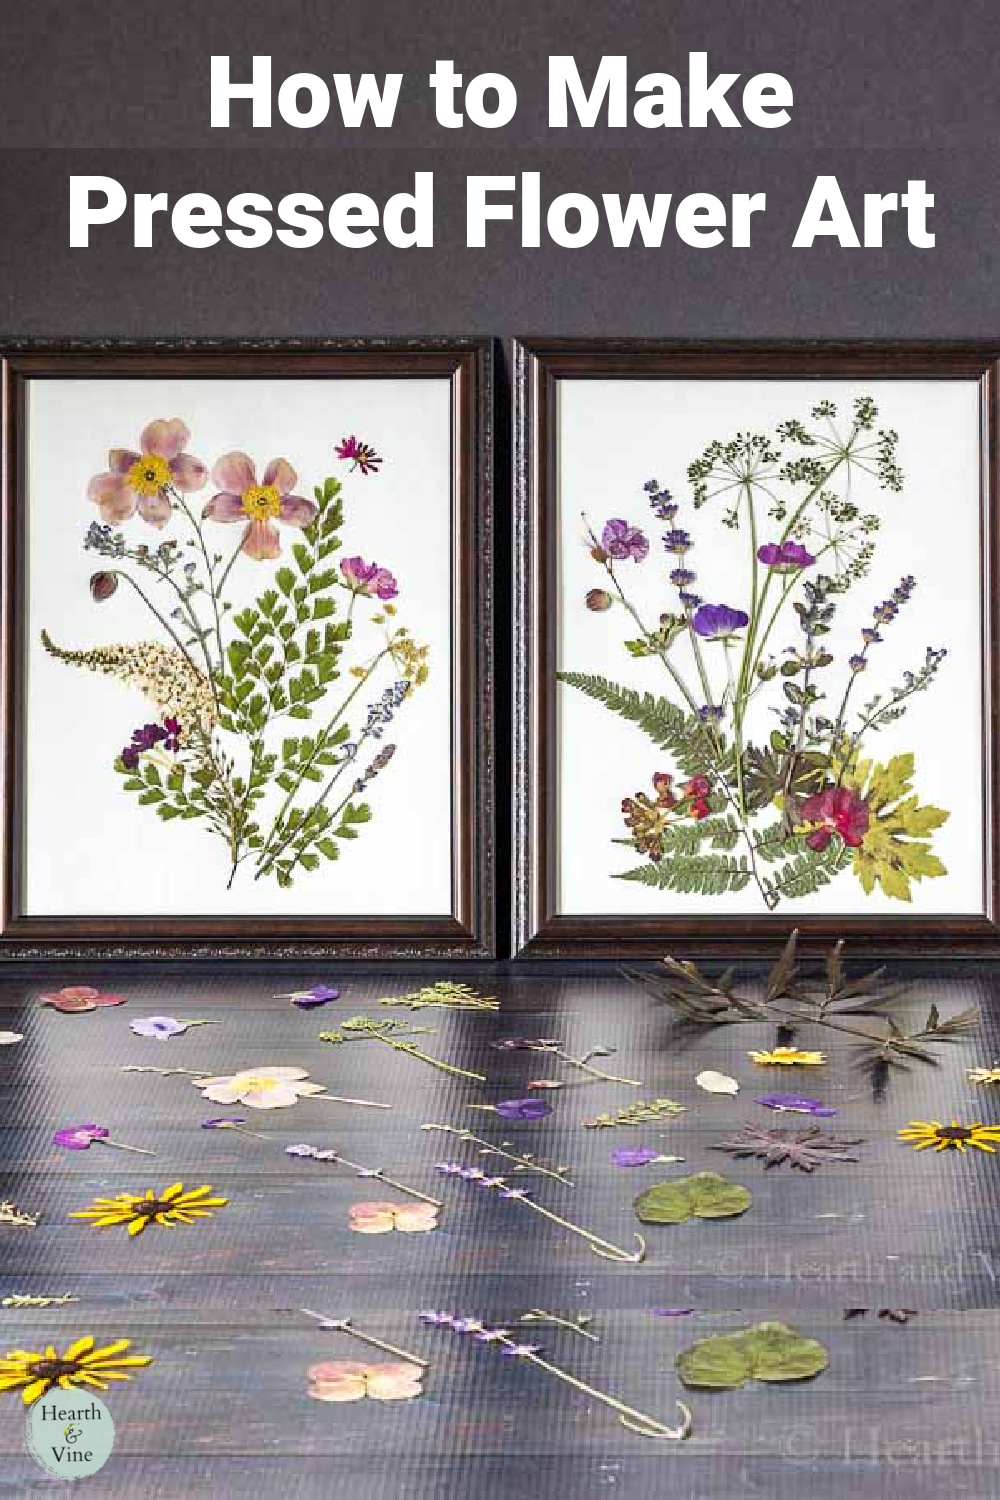 Two framed pressed flowers arranged as artwork.